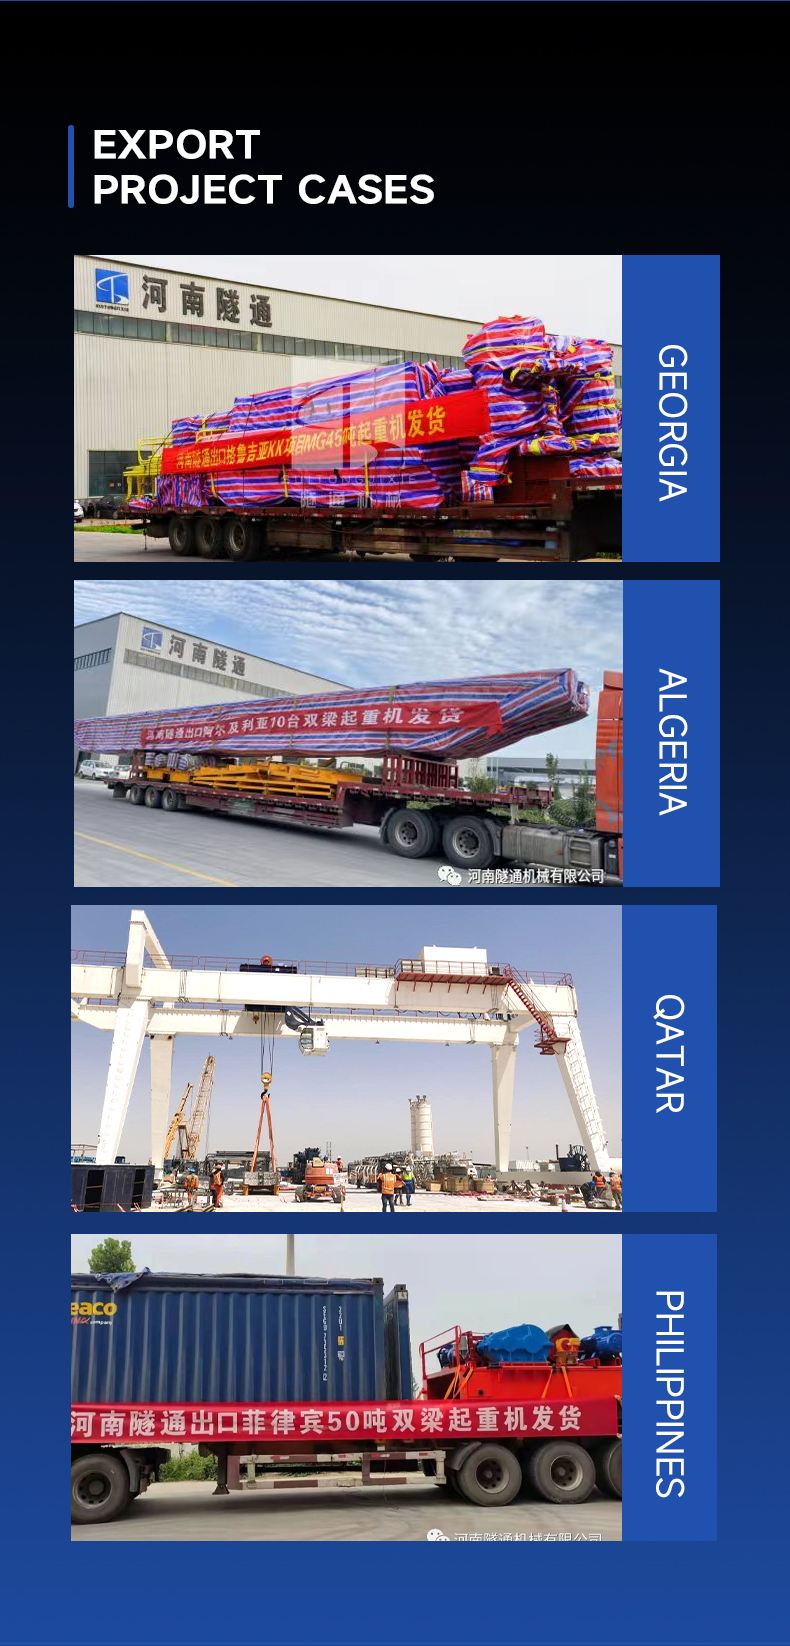 10 Ton 16 Ton   MHS model double girder gantry crane  best prices  Customised   For Sale